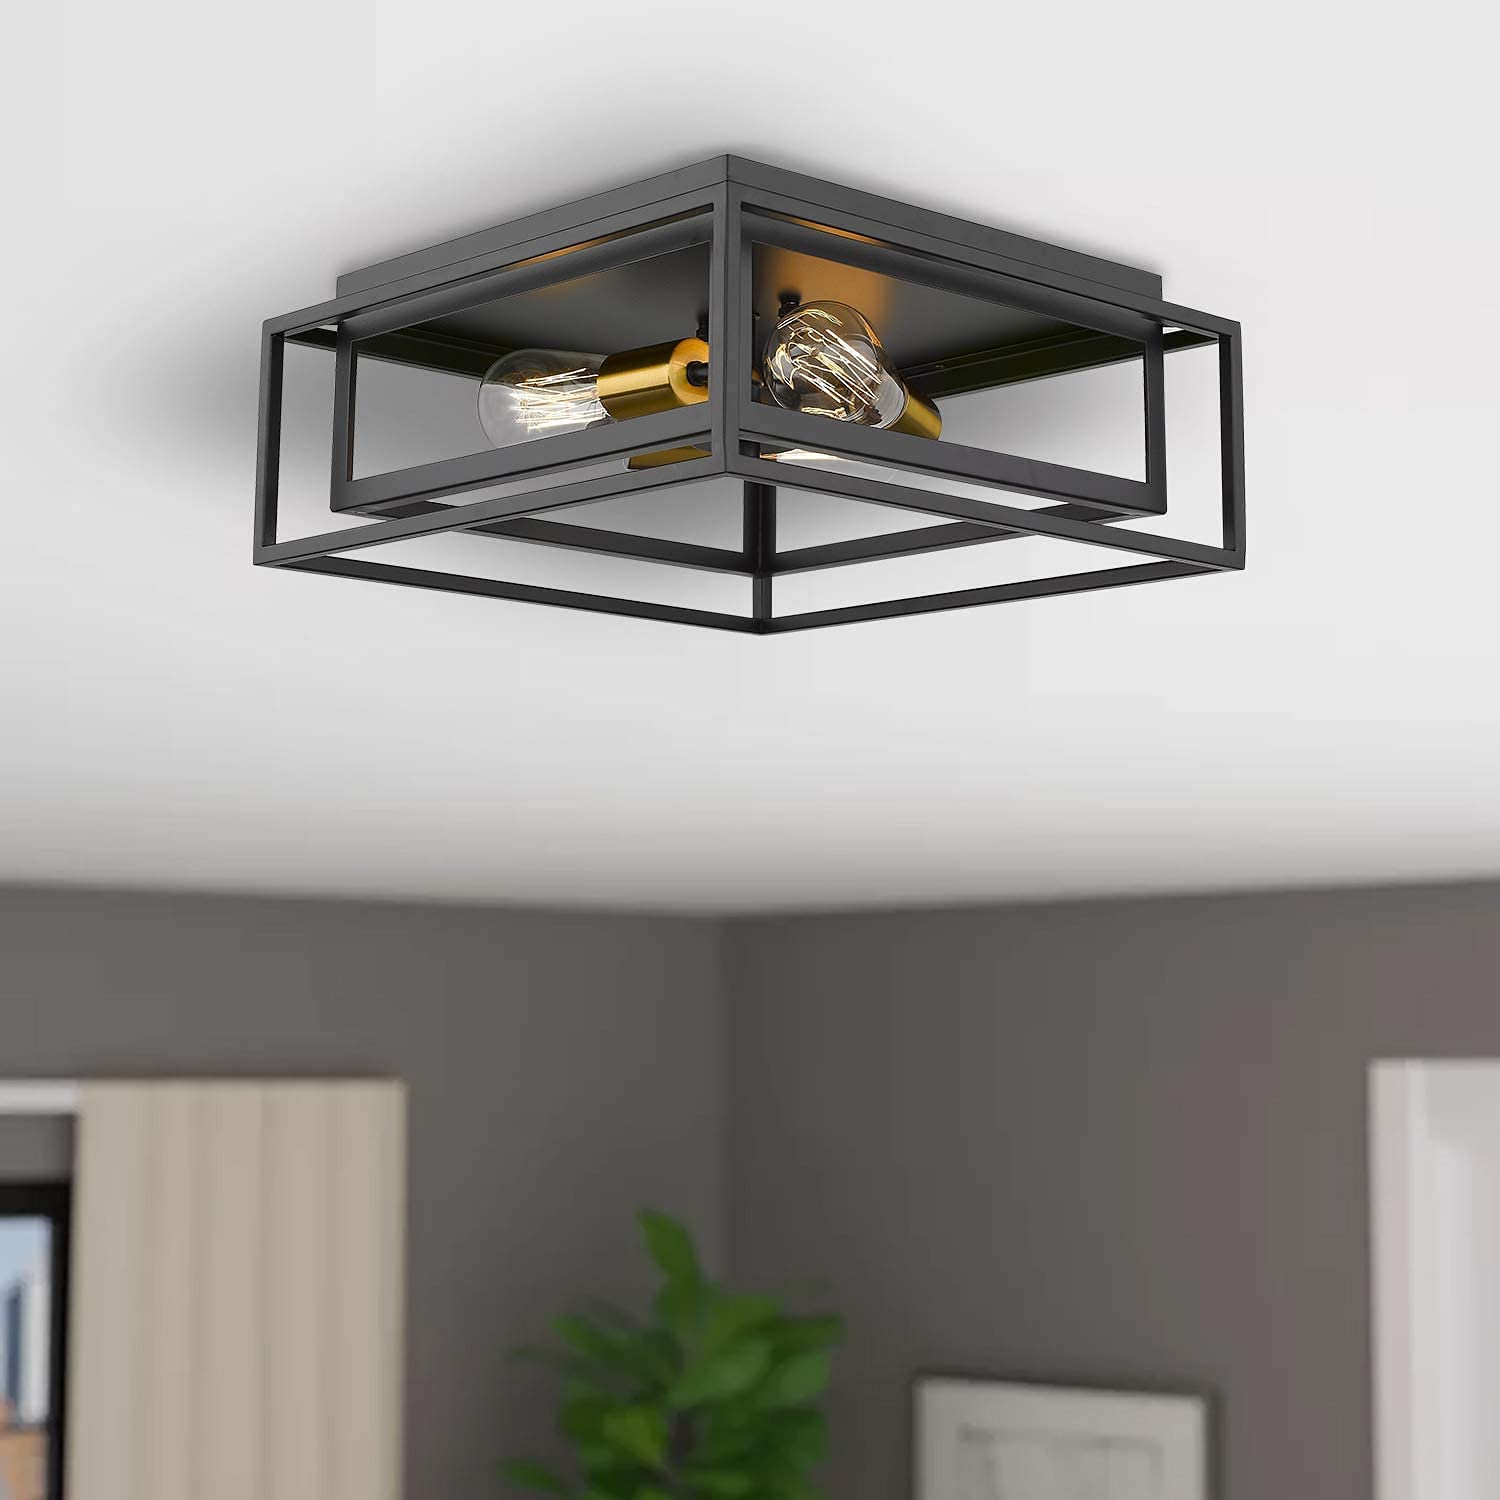 3 light square Flush Mount Ceiling Light Fixture black cage ceiling lamp